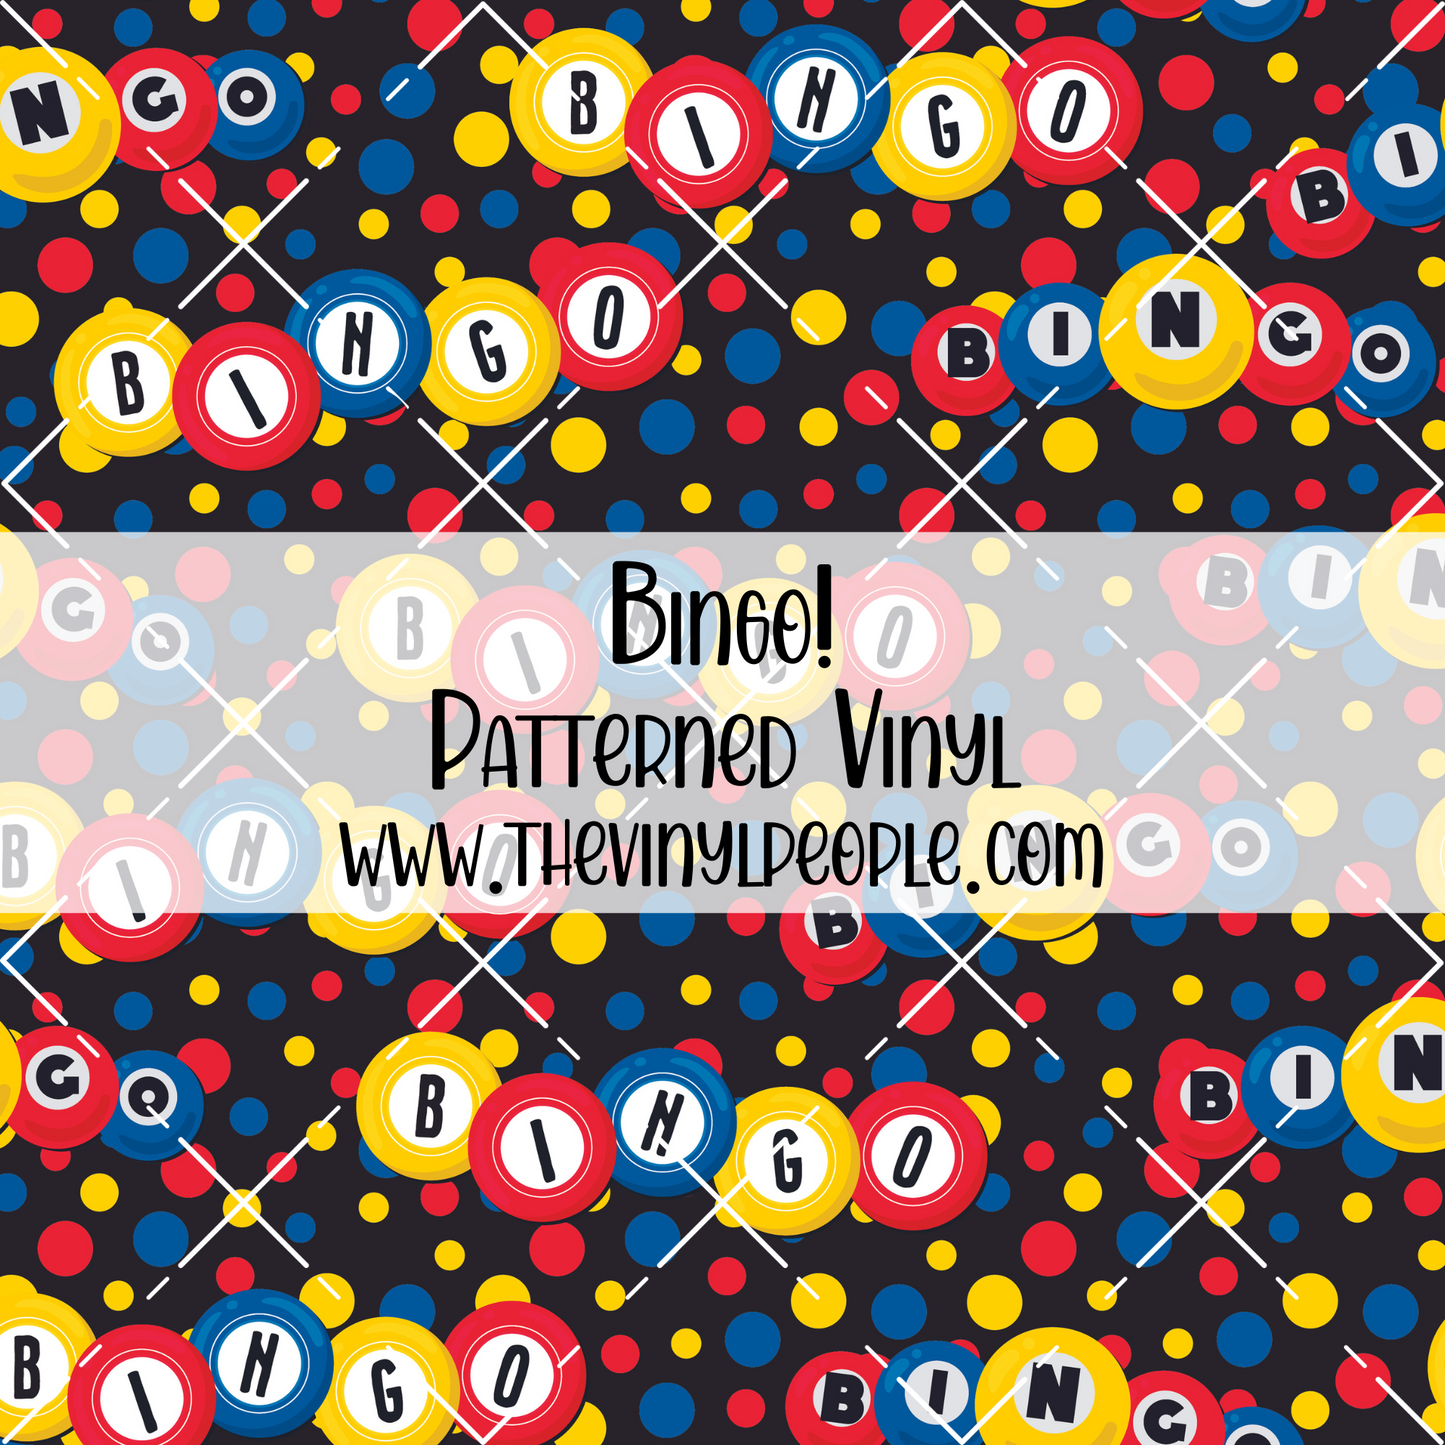 Bingo! Patterned Vinyl